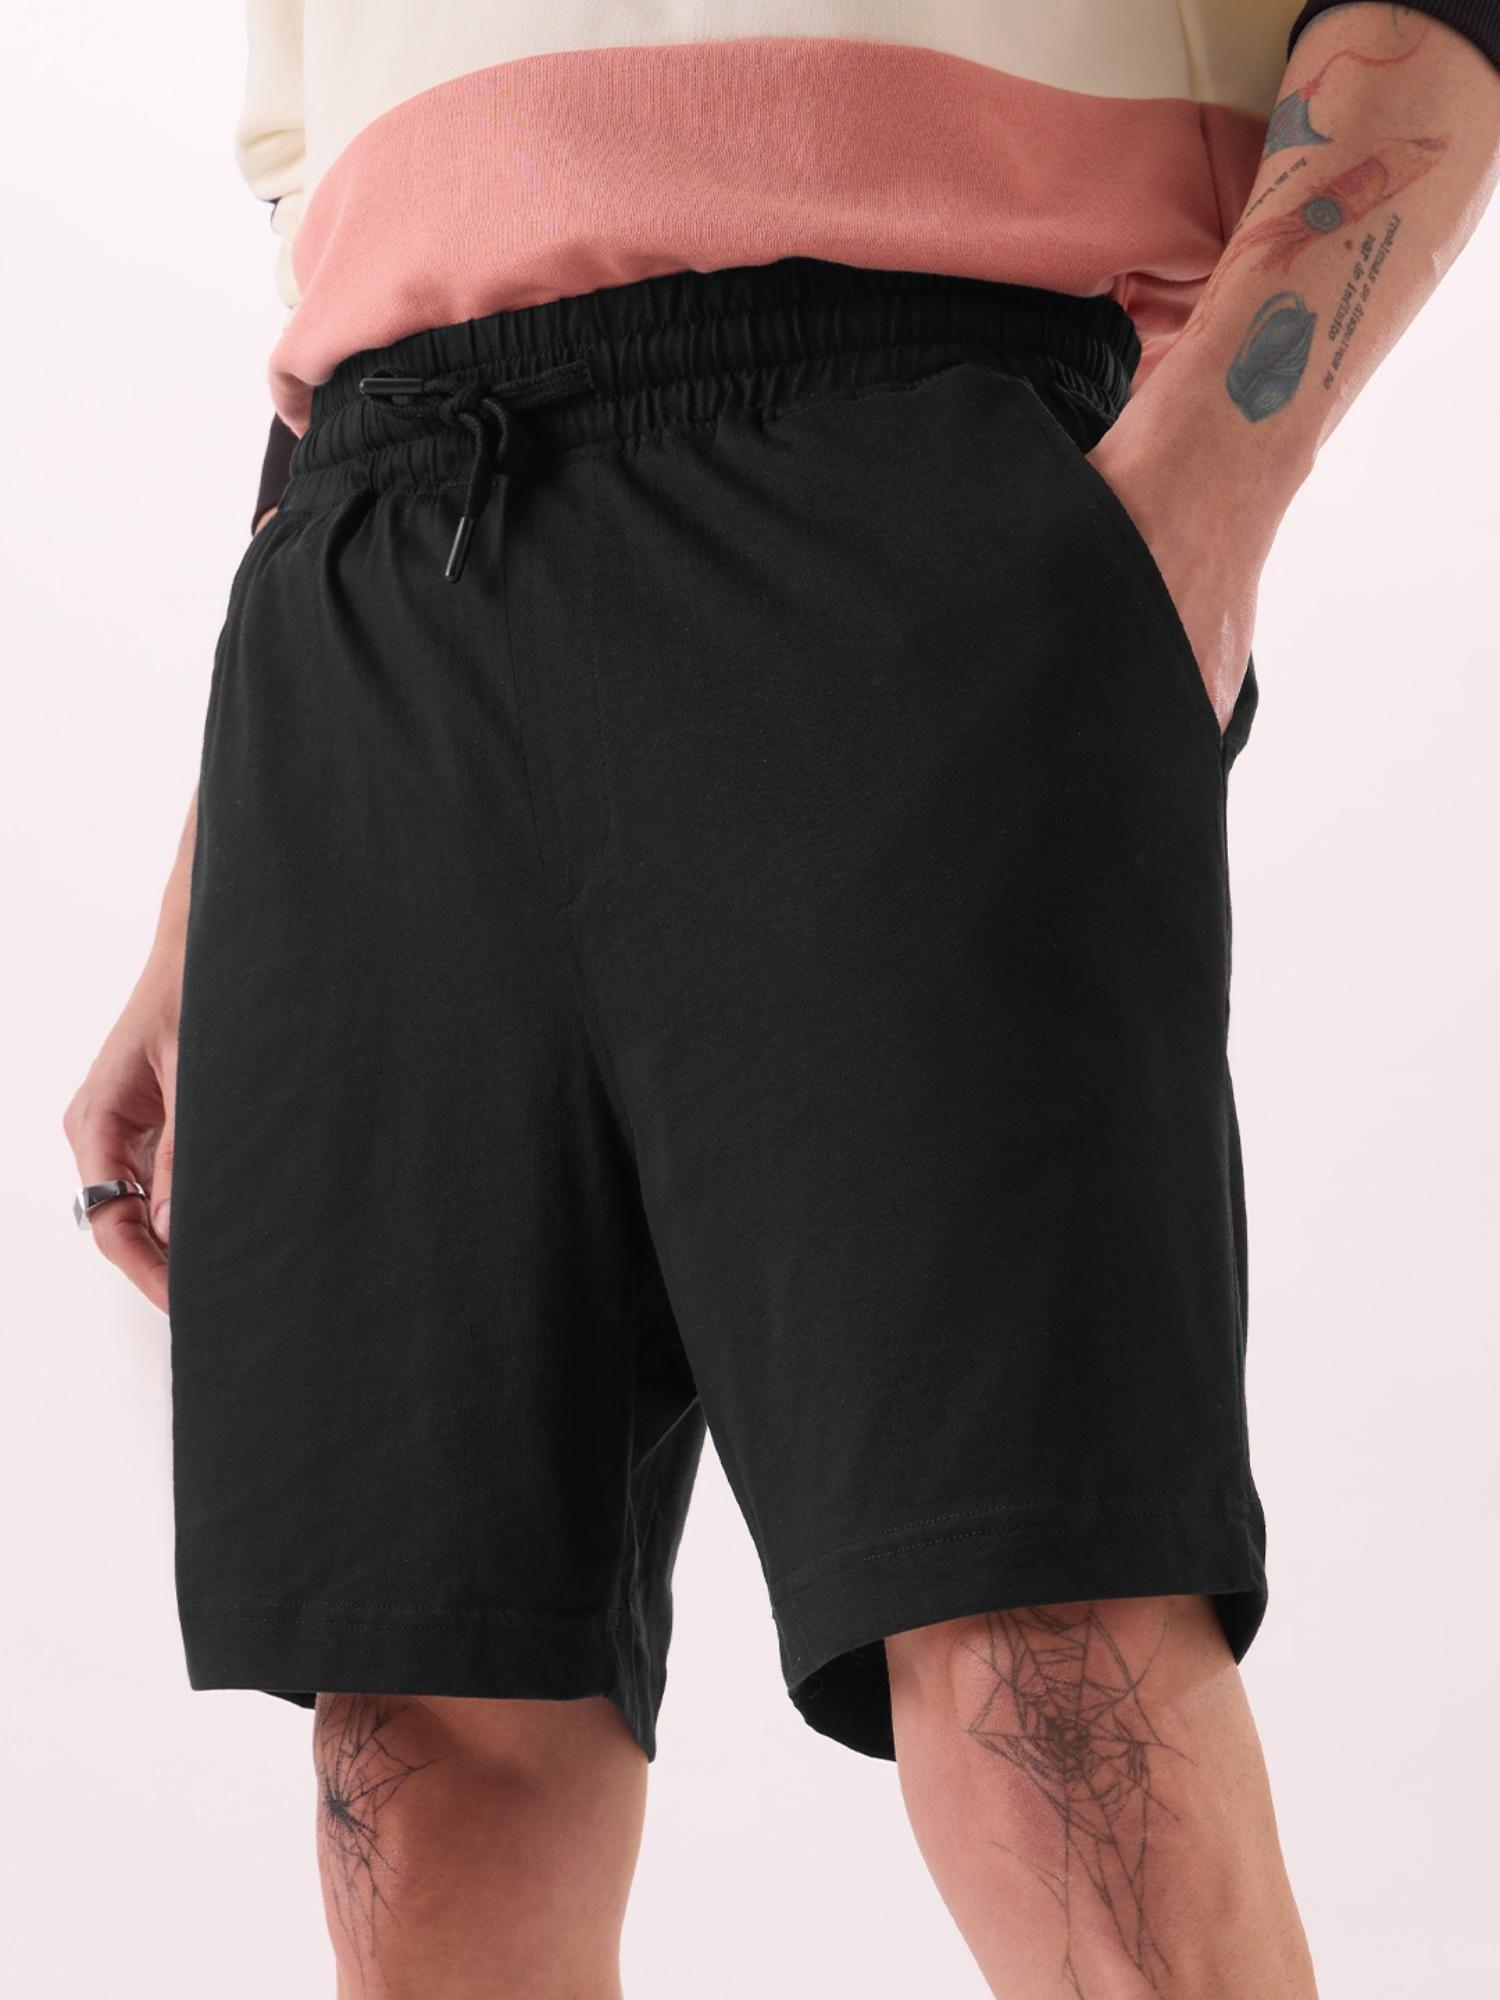 original home shorts: black men home shorts